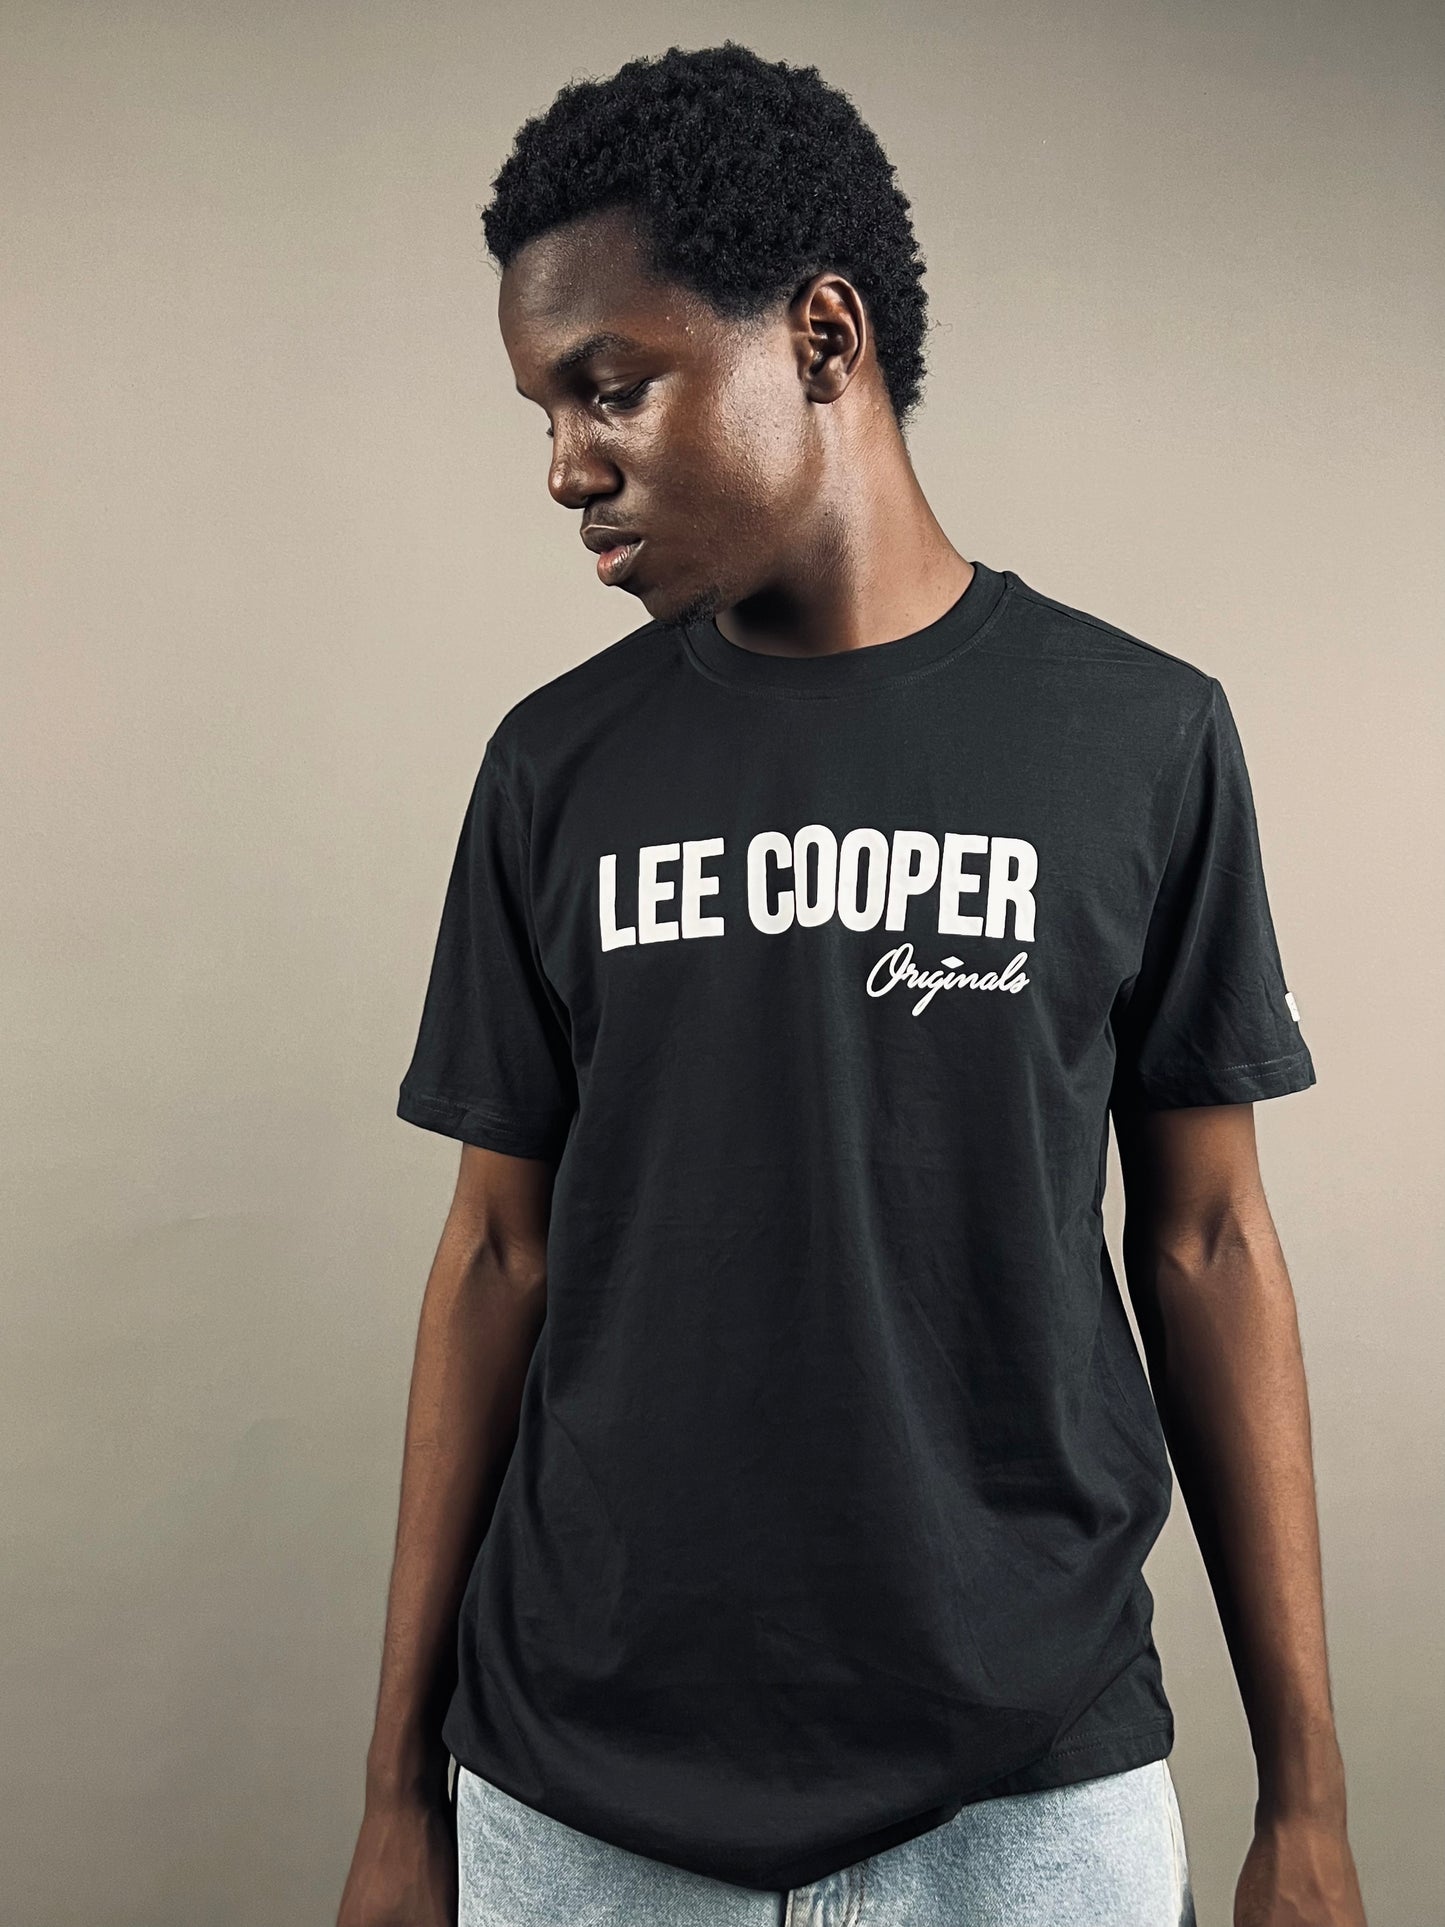 Lee Cooper Print T-shirt in black